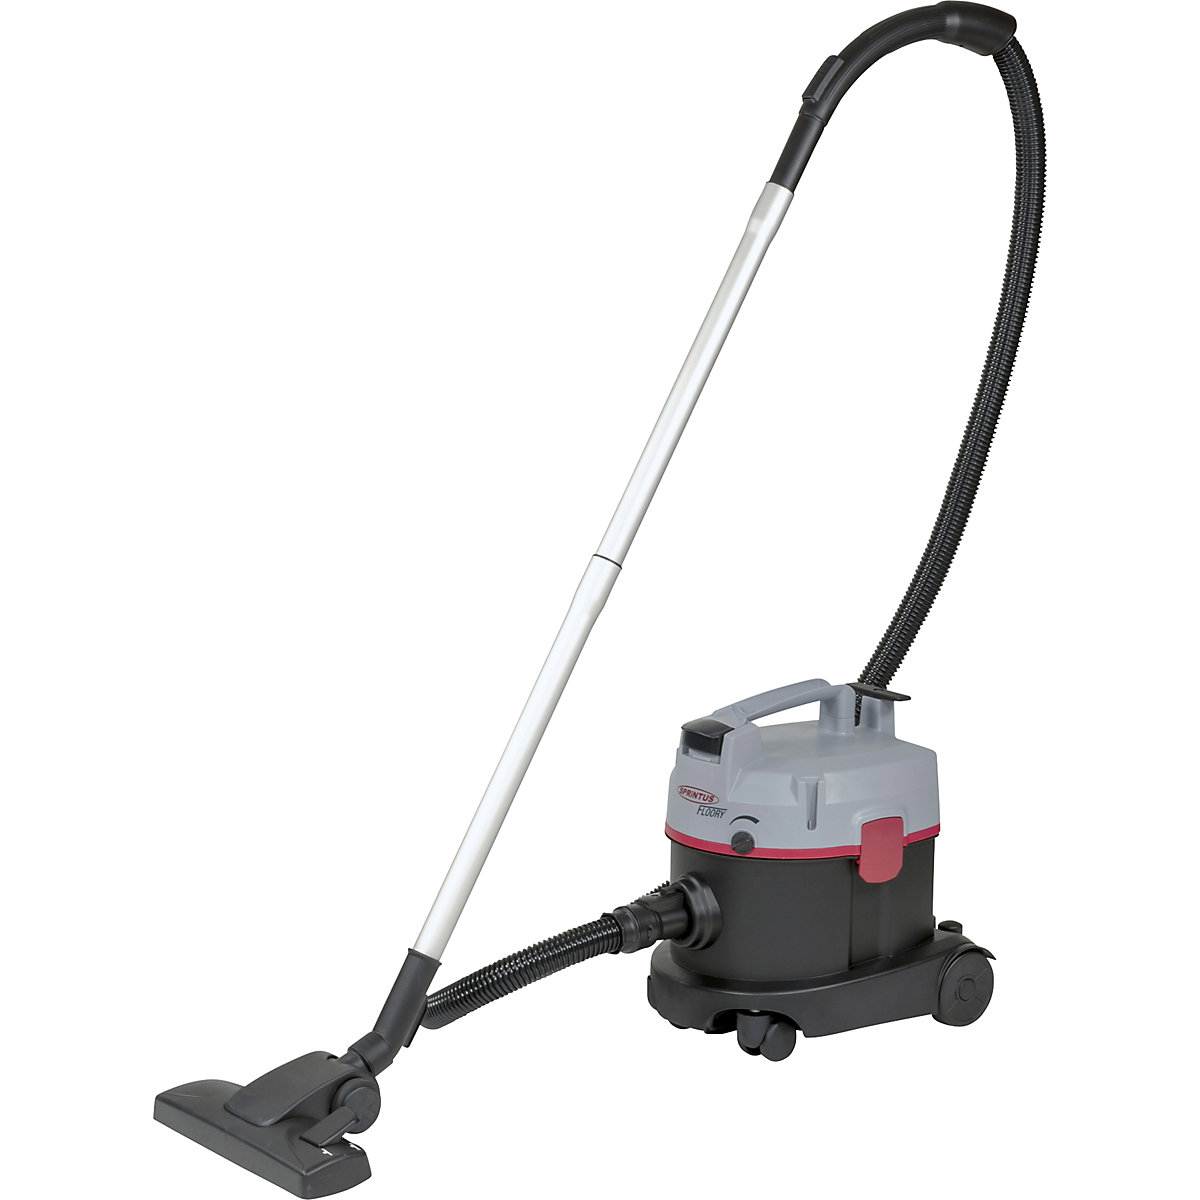 Dry vacuum cleaner, entry level class - Sprintus